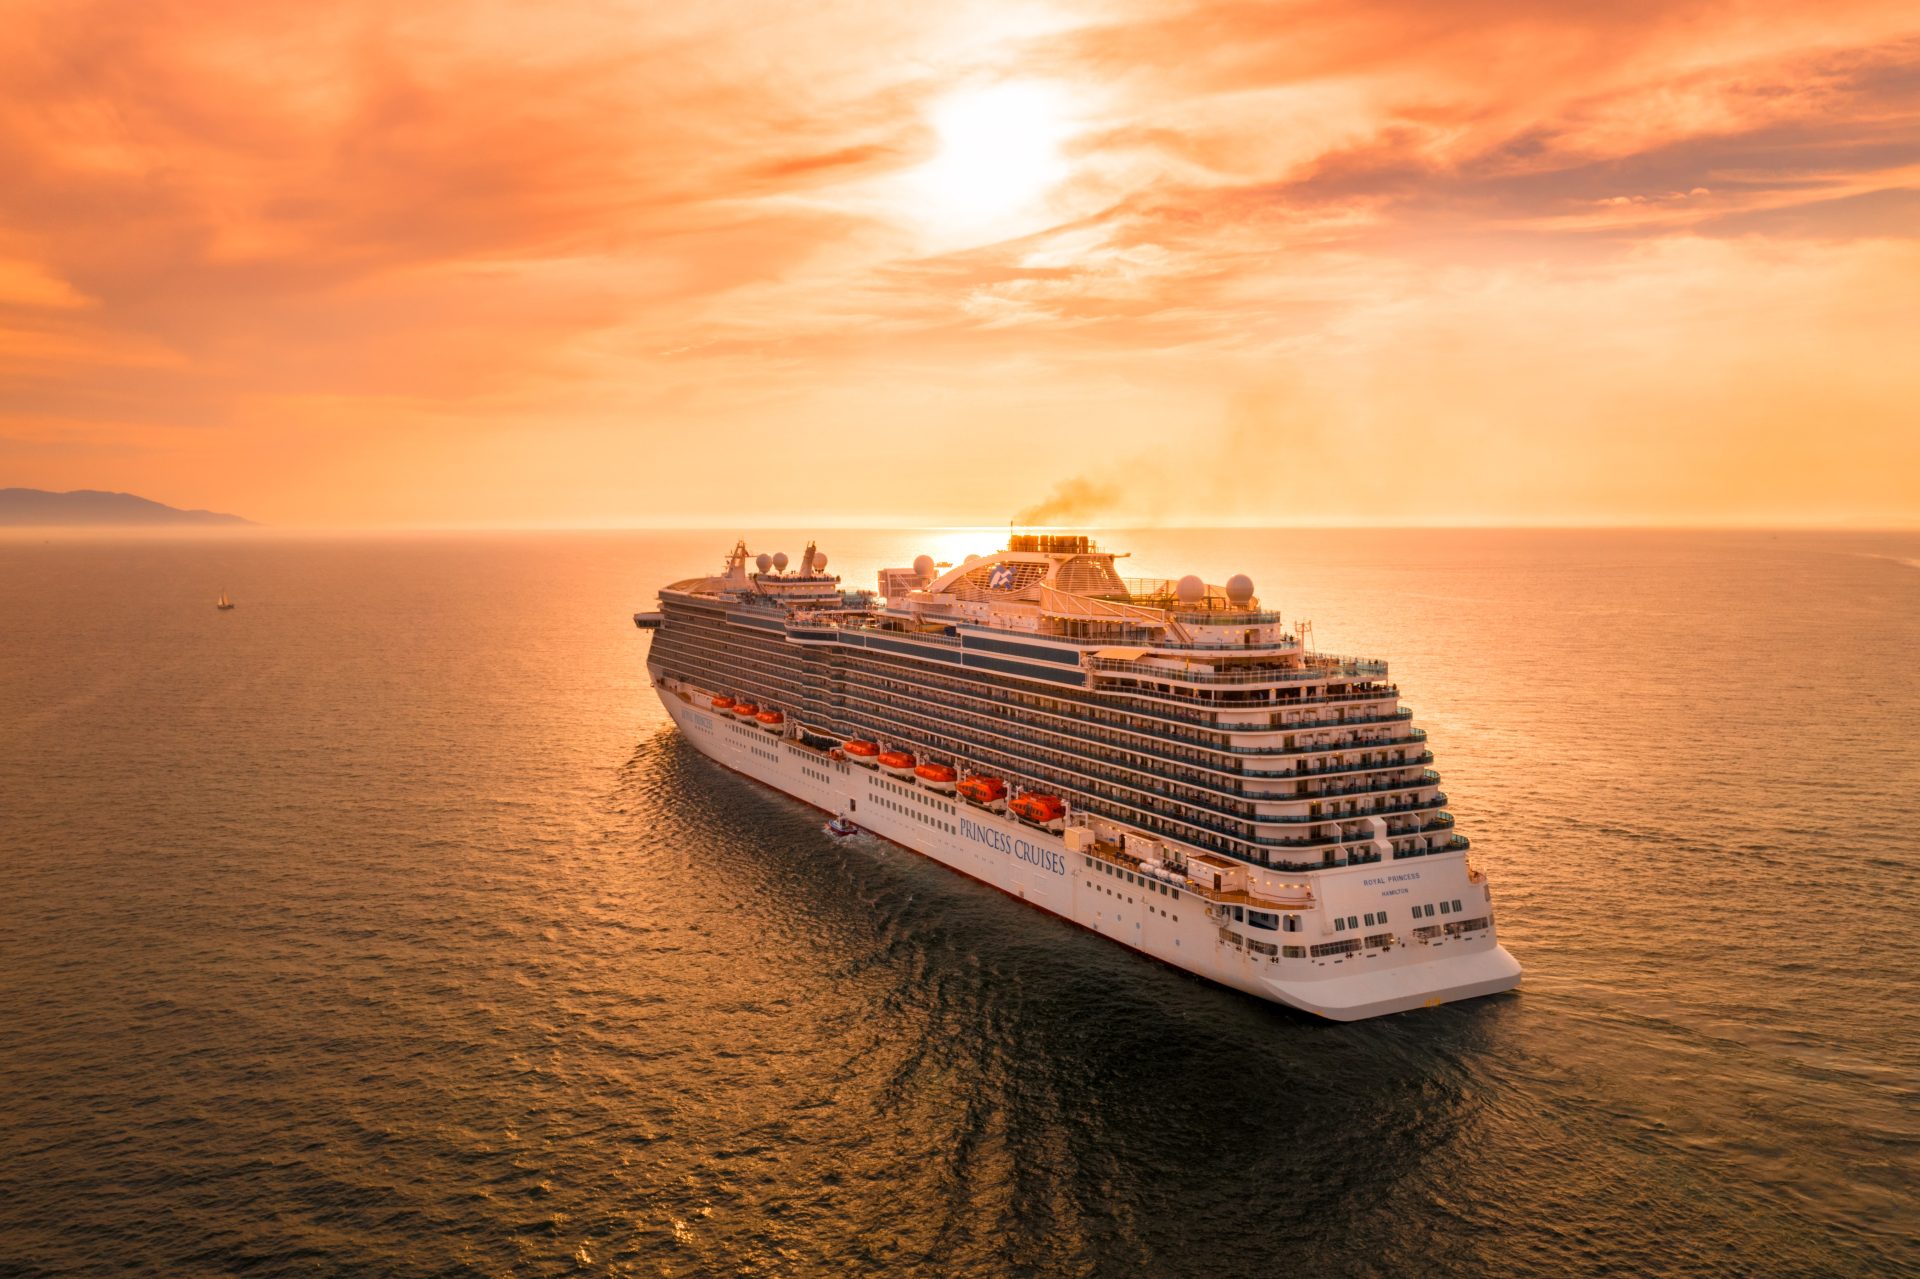 A sailing cruise ship on a sunset backdrop.